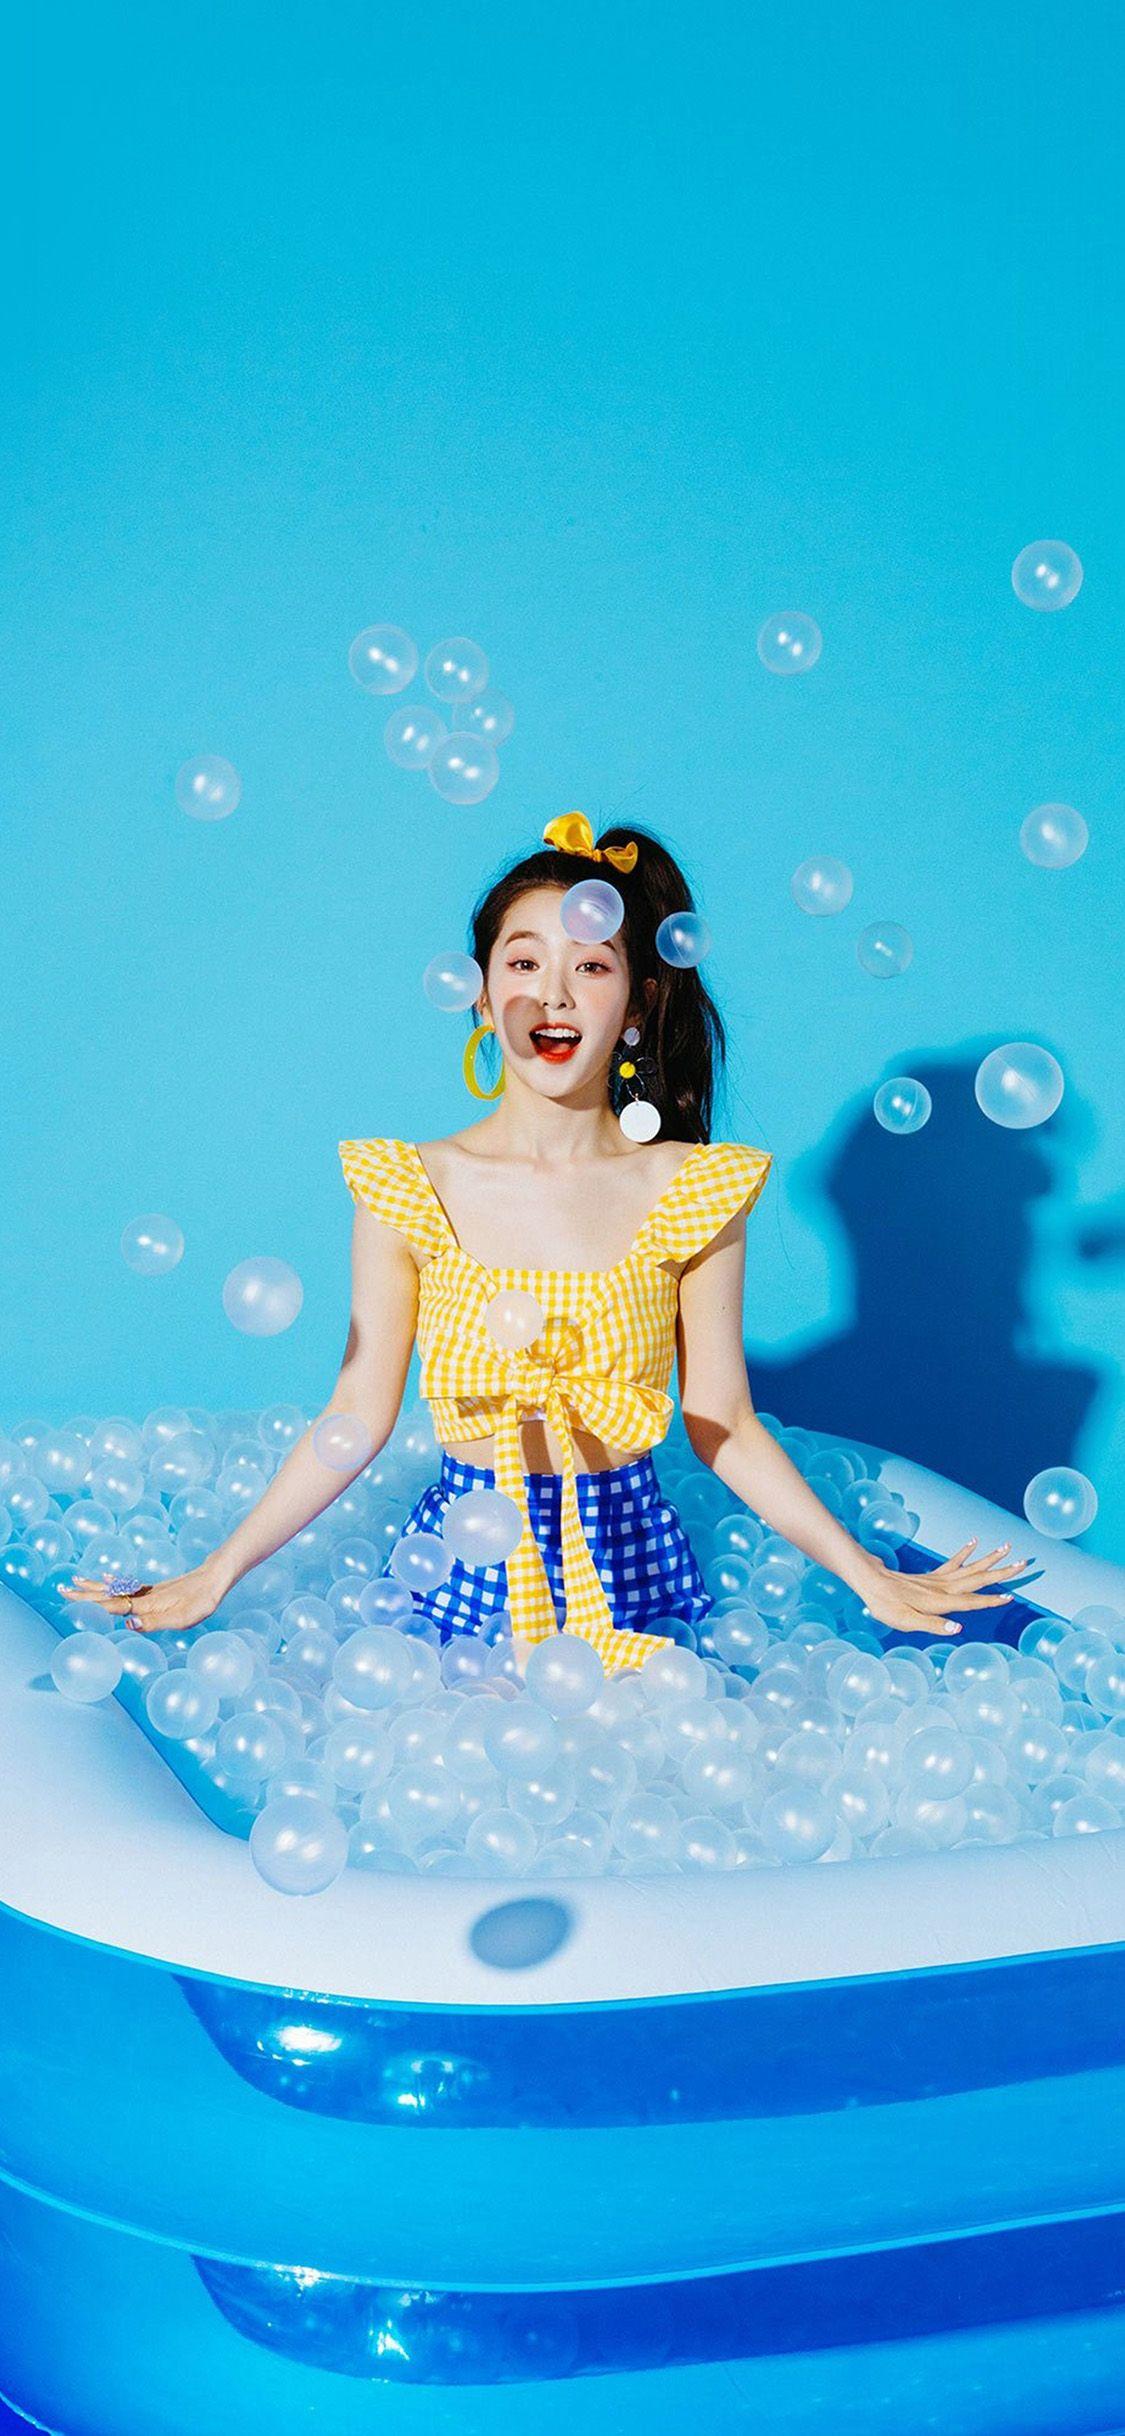 iPhoneX wallpaper: blue girl redvelvet kpop summer water